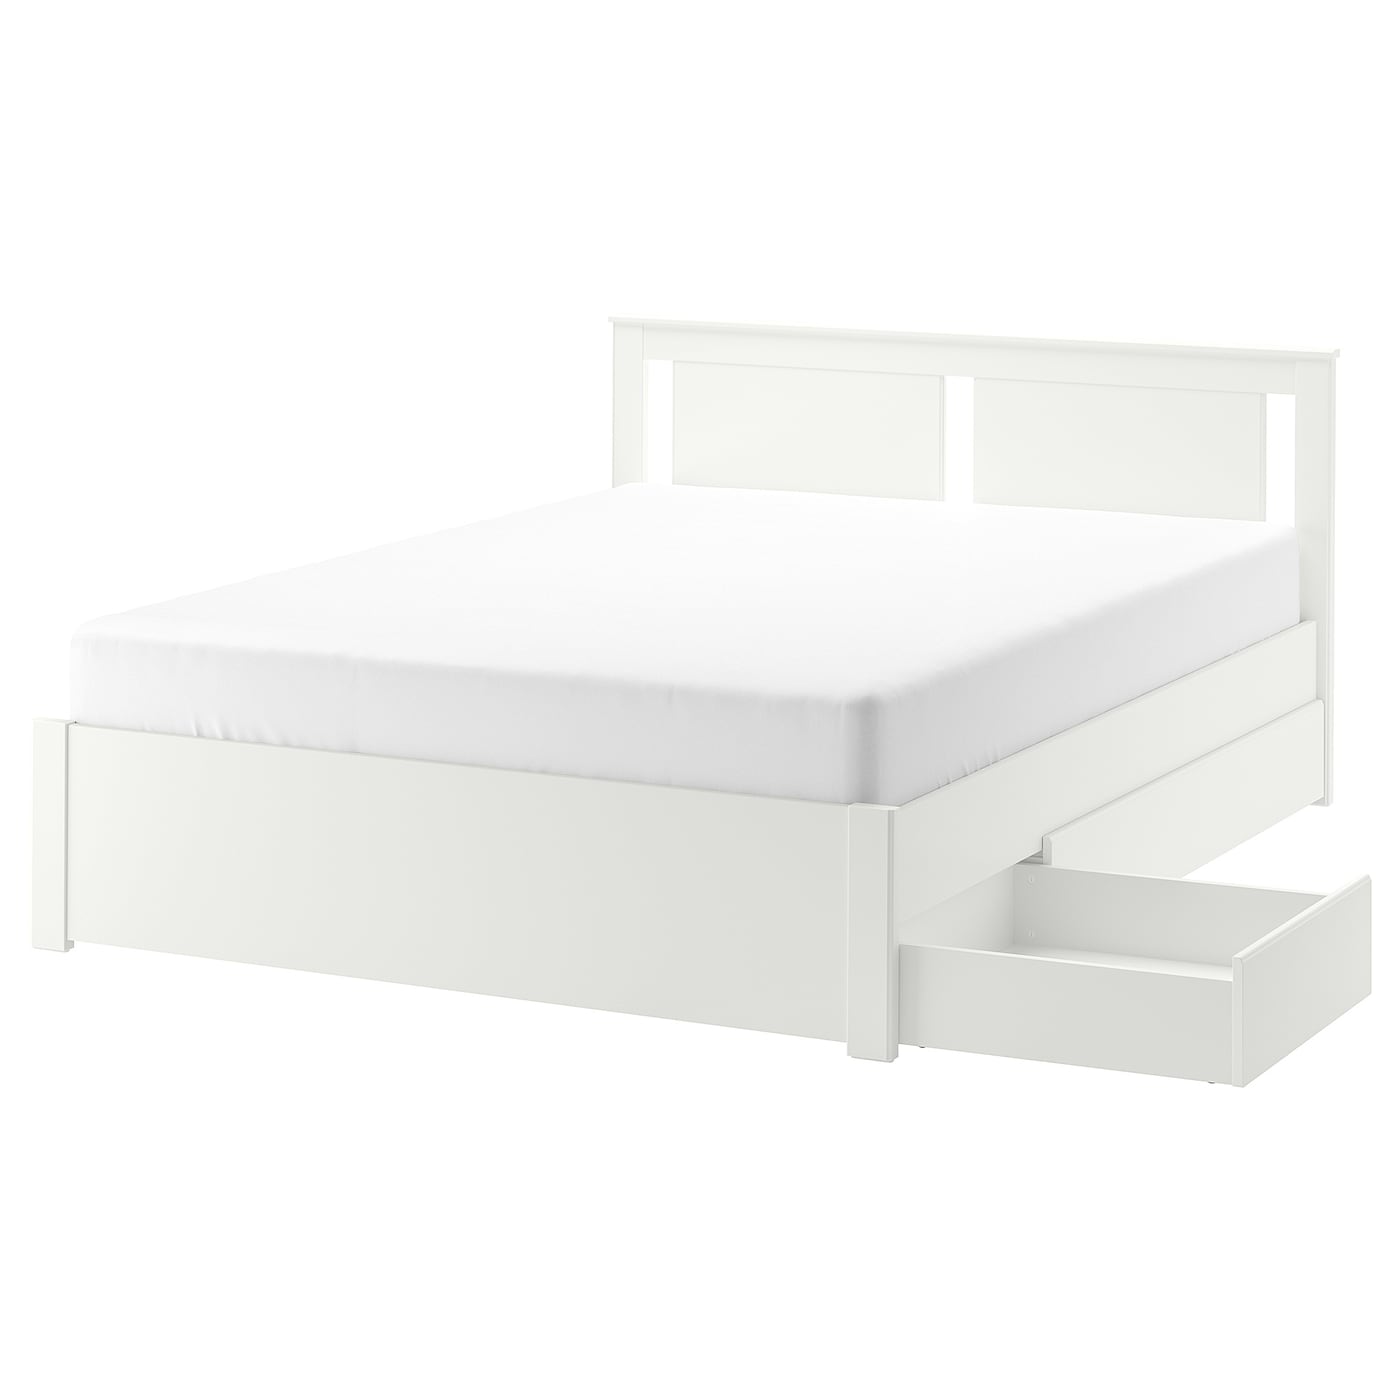 Каркас кровати с 2 ящиками для хранения - IKEA SONGESAND, 200х160 см, белый, СОНГЕСАНД ИКЕА